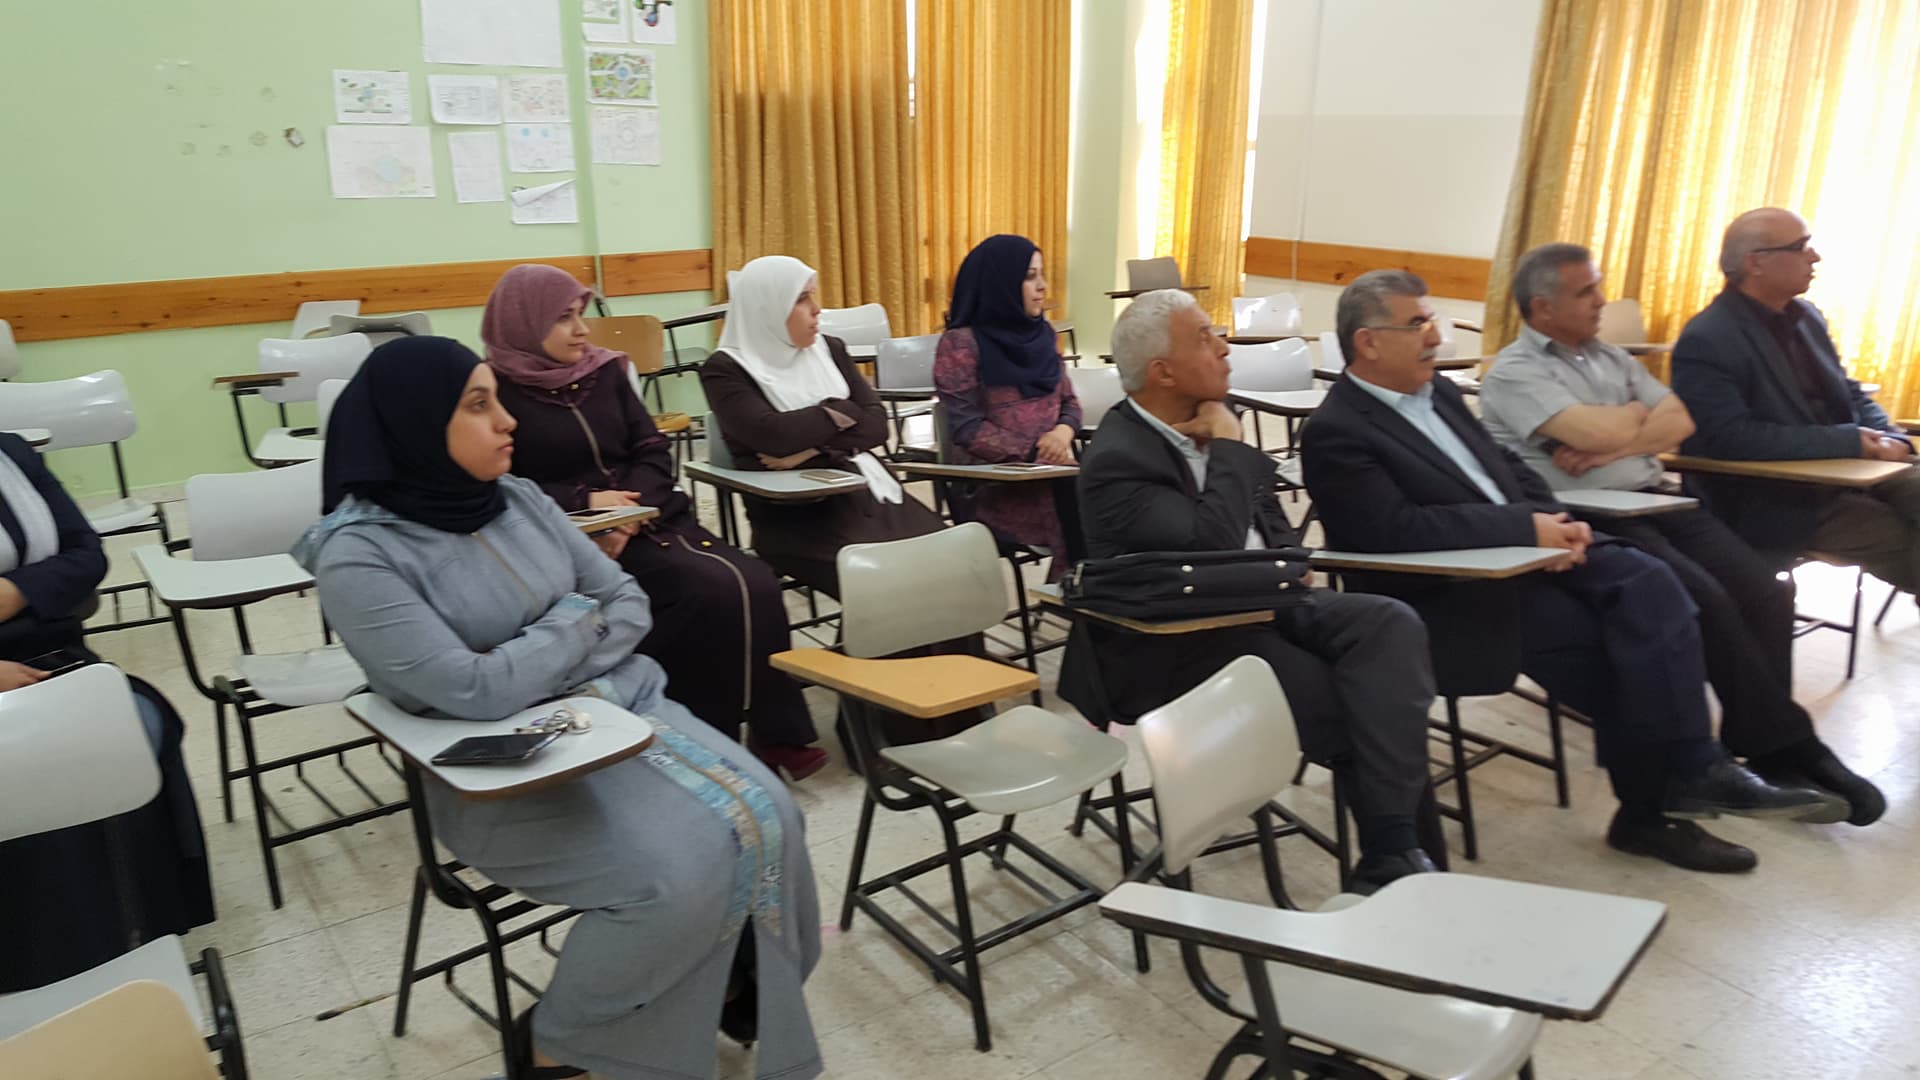 Palestine Polytechnic University (PPU) - محاضرة علمية بعنوان "تحضير وتوصيف رقائق للتطبيقات الالكتروضوئية" يلقيها الدكتور عثمان زلوم 